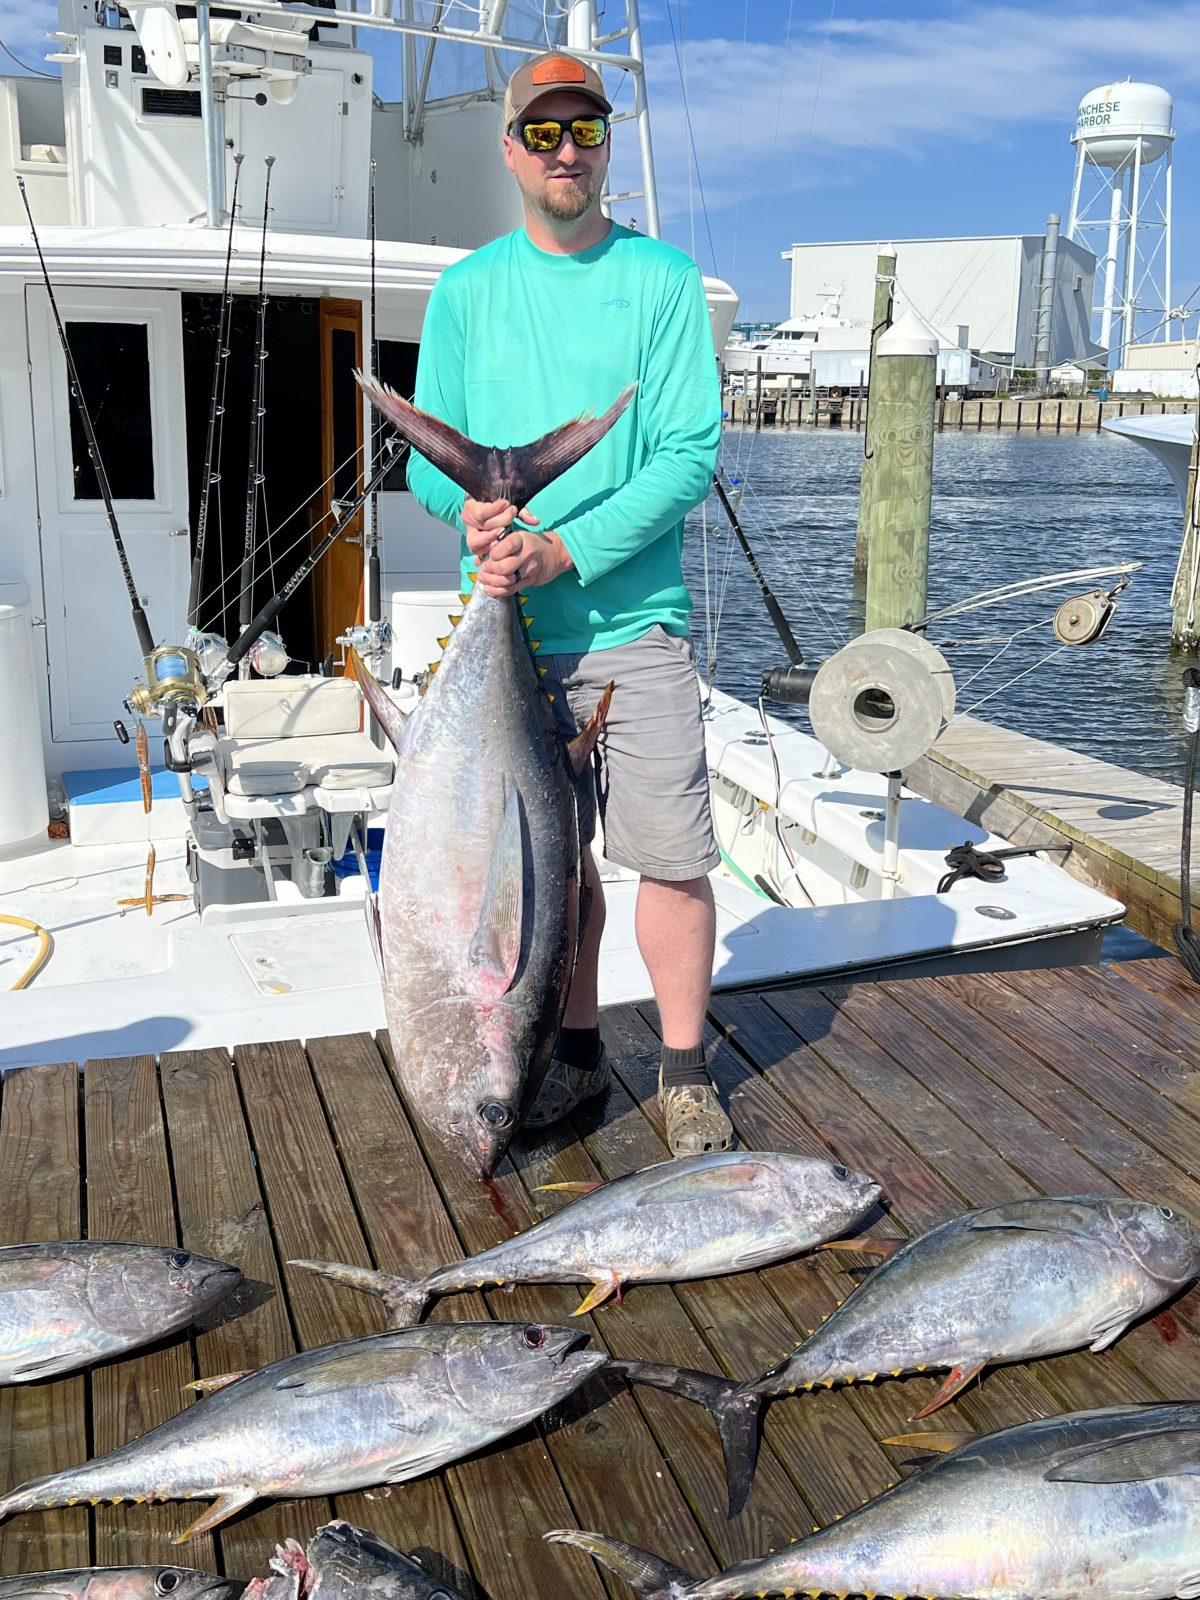 Bigeye tuna fishing capture the imagination - Anglers Journal - A Fishing  Life